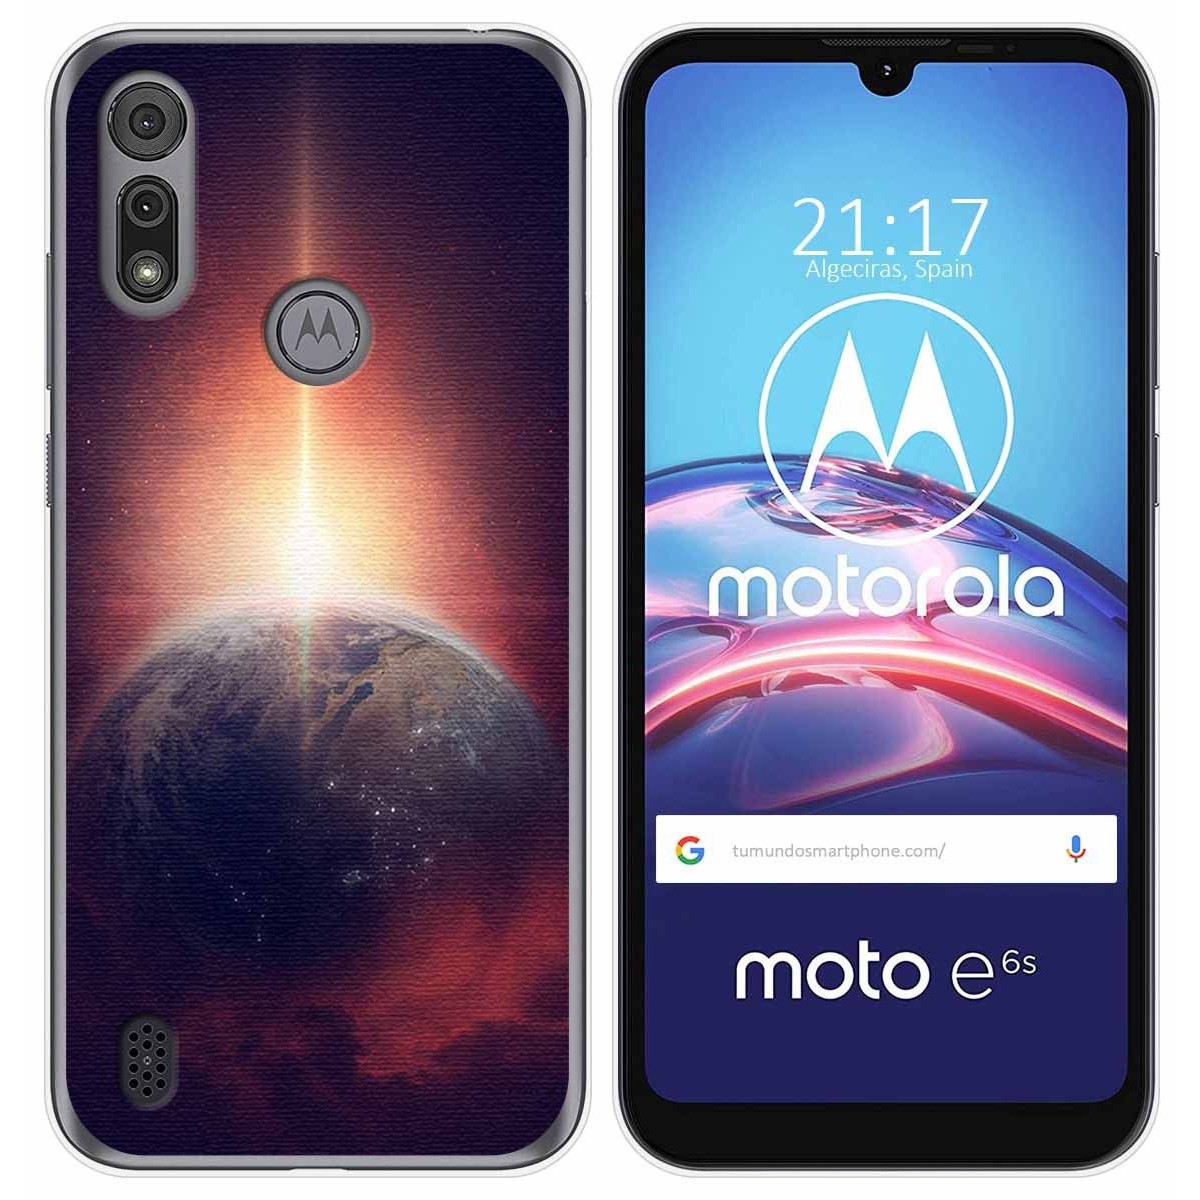 Funda Gel Tpu para Motorola Moto e6s diseño Tierra Dibujos